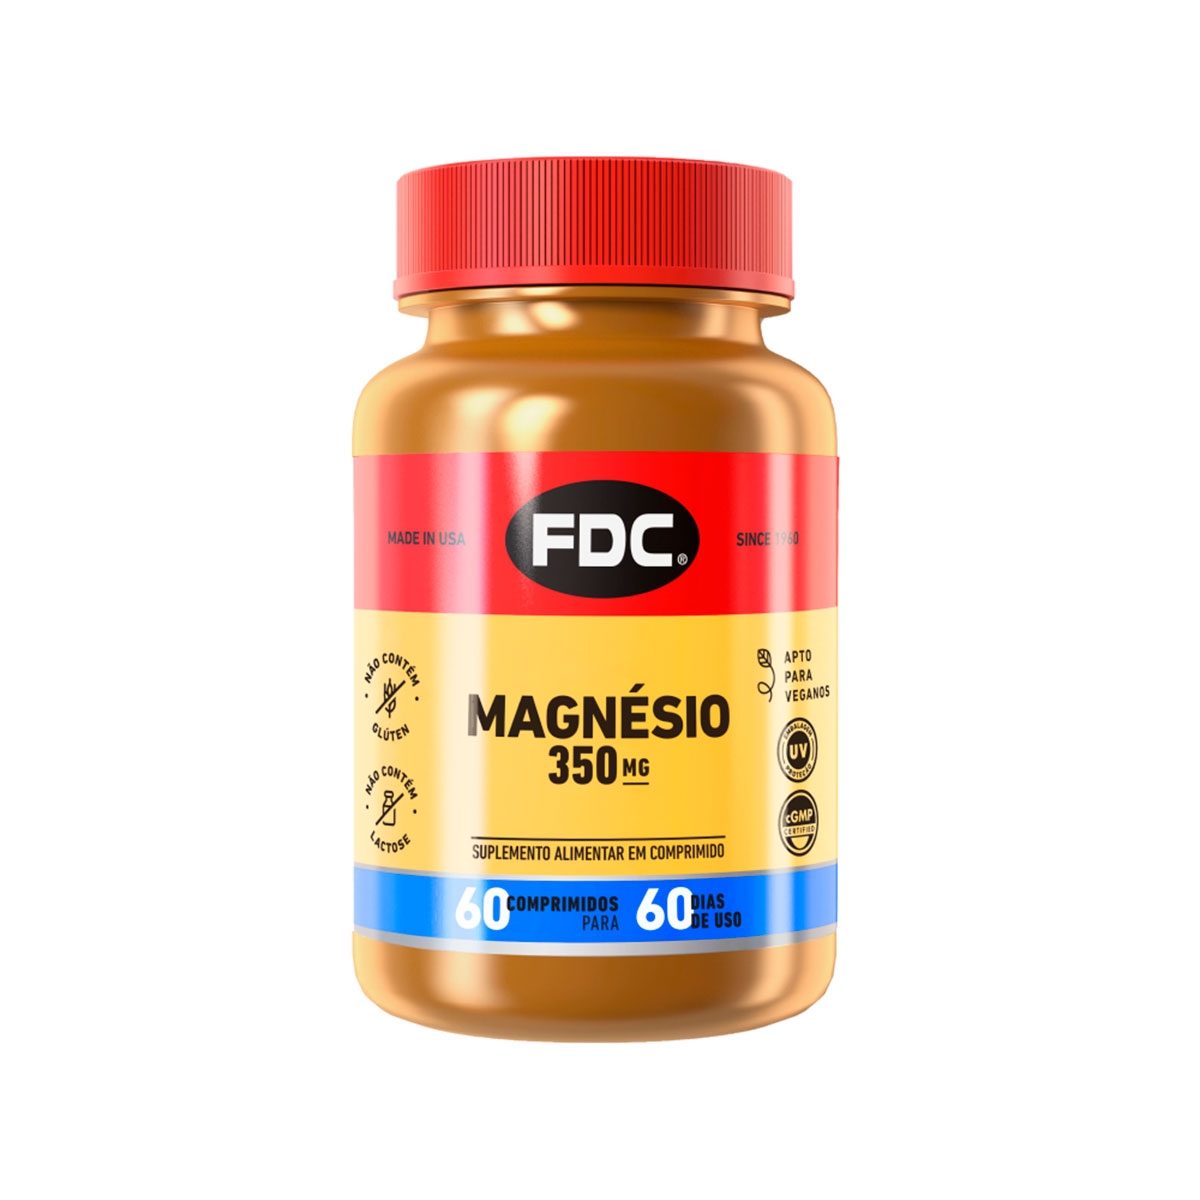 Magnésio 350mg FDC com 60 comprimidos